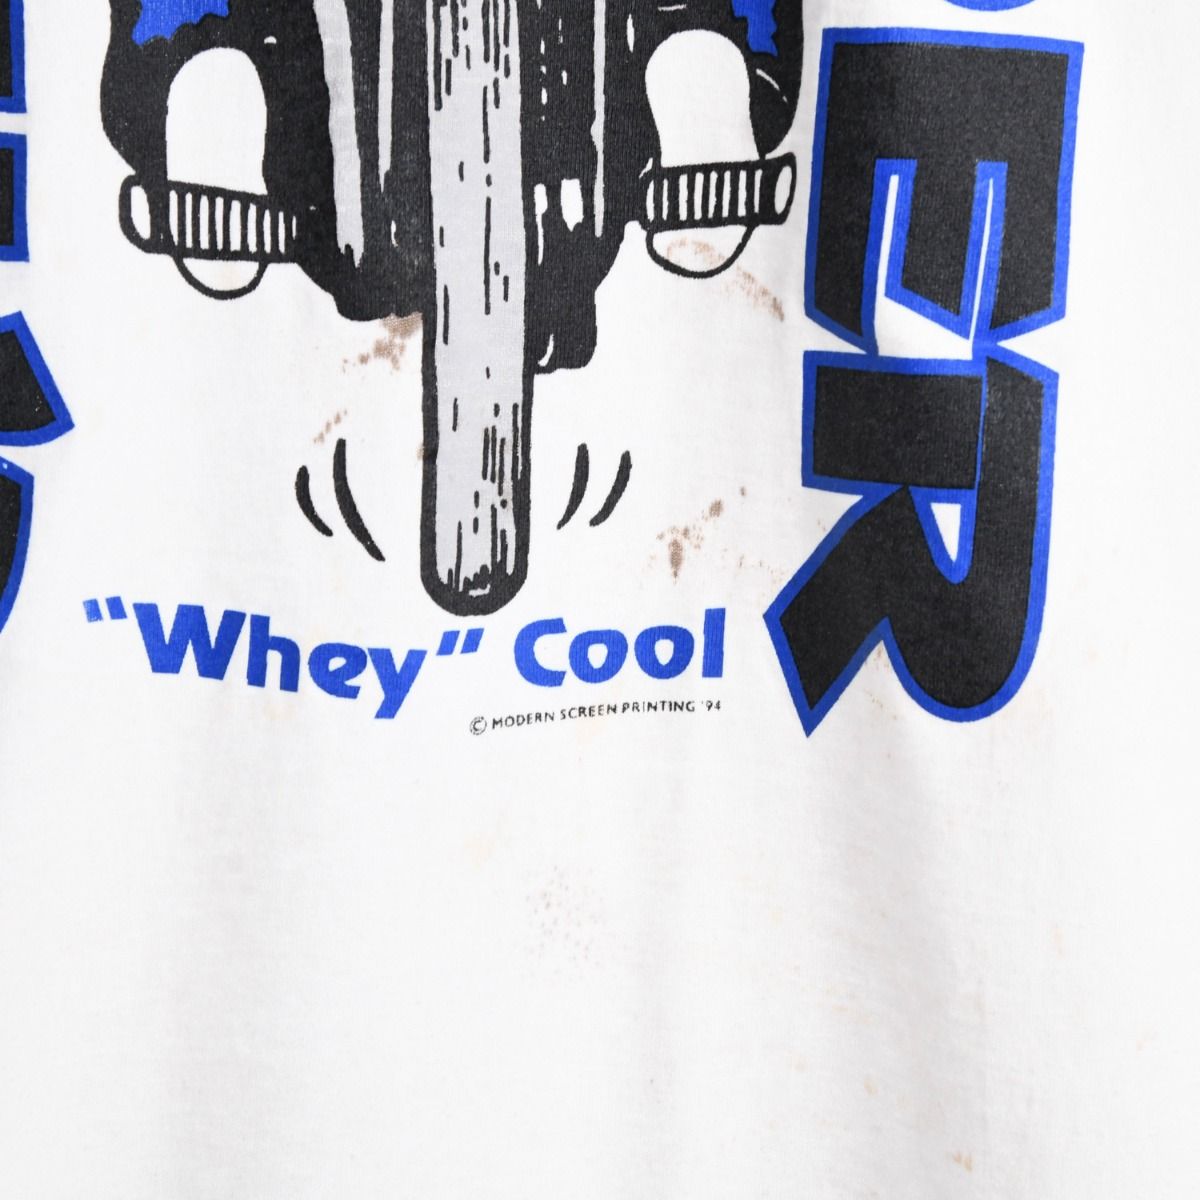 Cheesy Rider 1994 T-Shirt